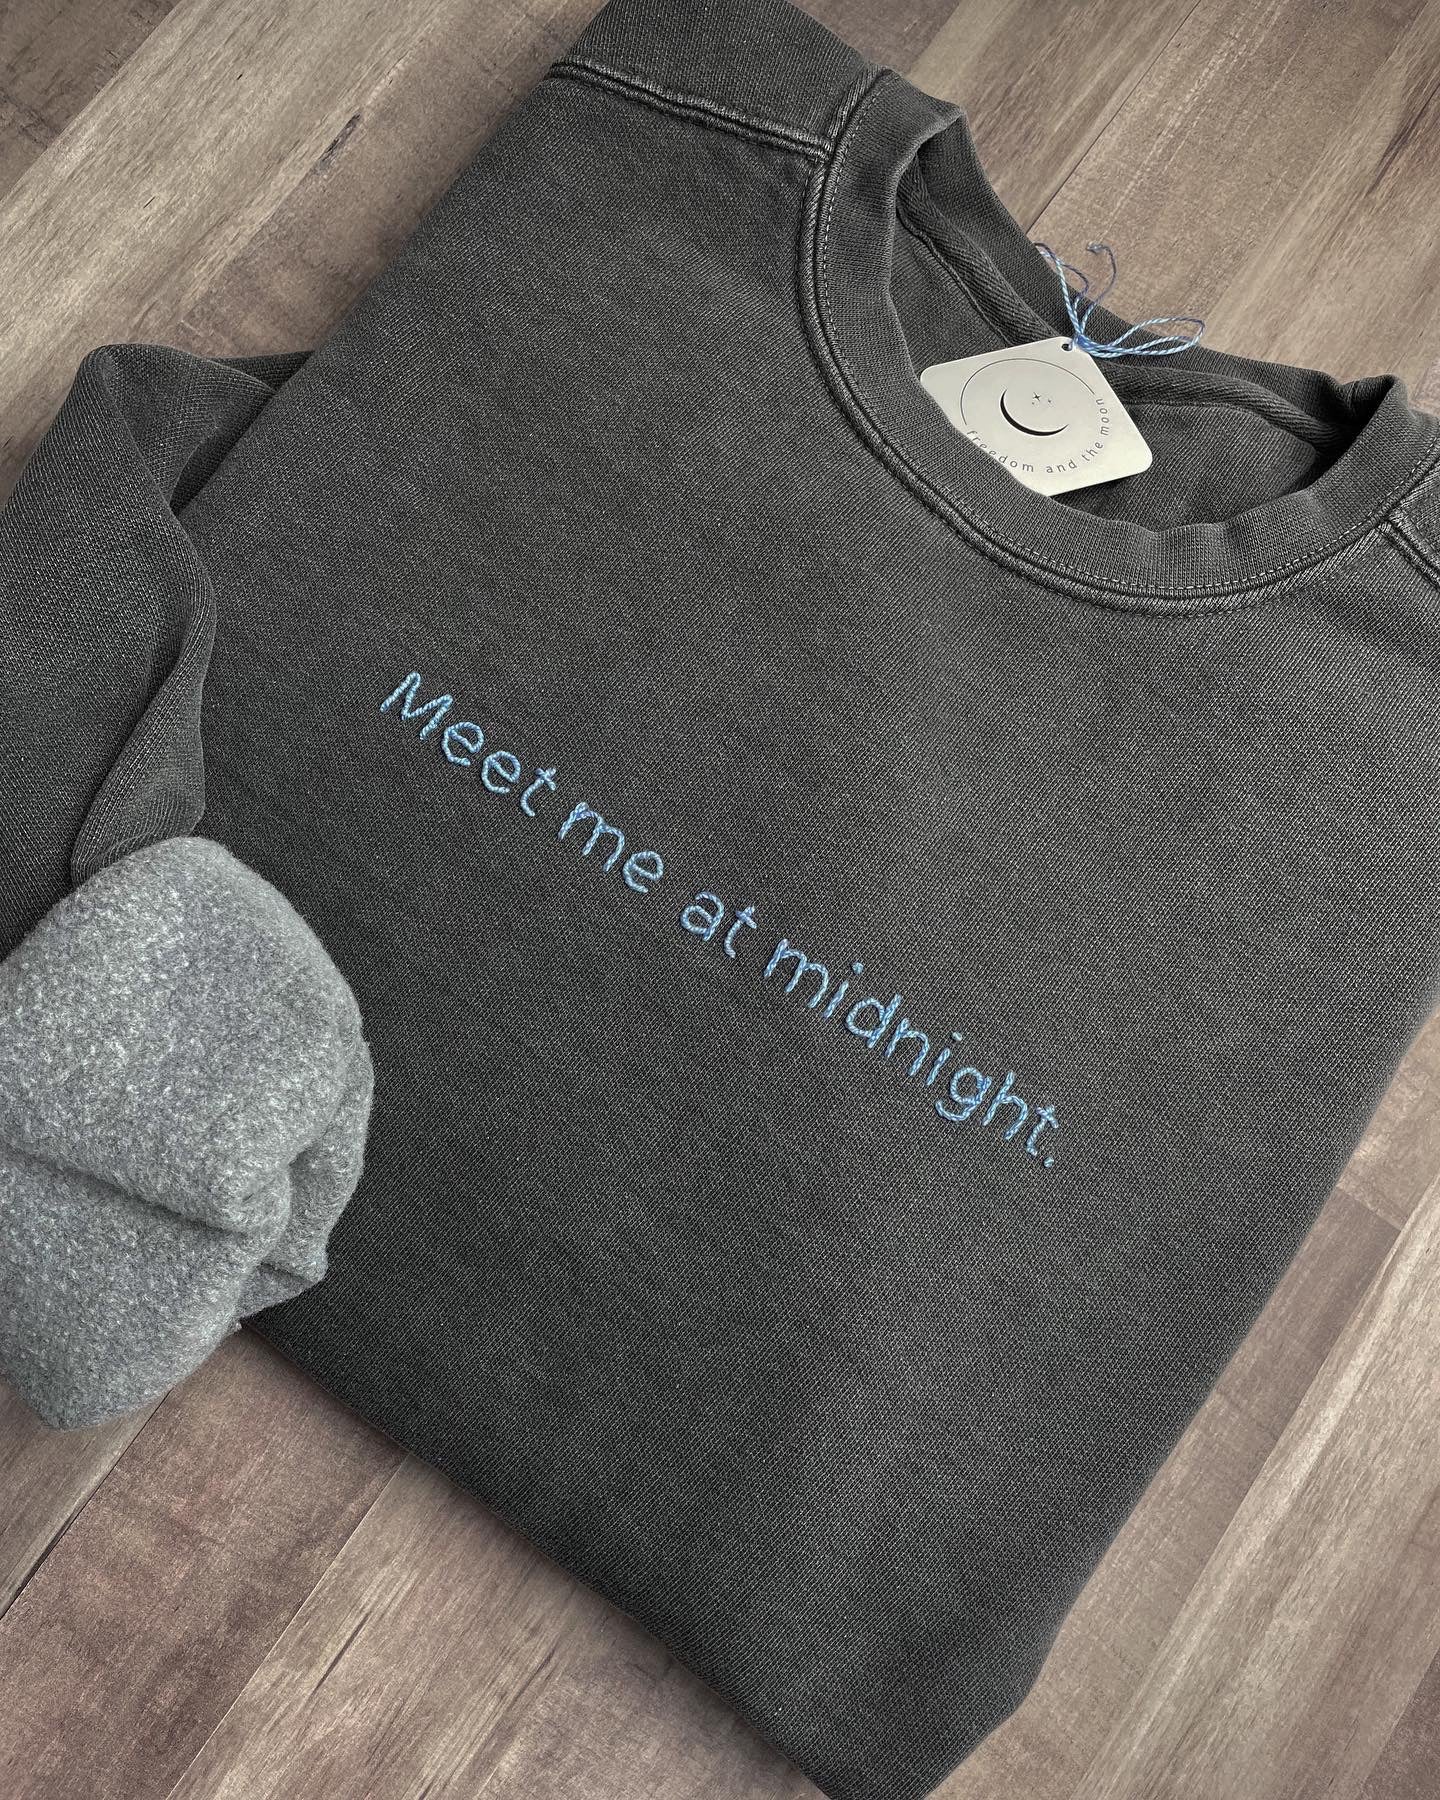 Meet Me At Midnight. Sweatshirt